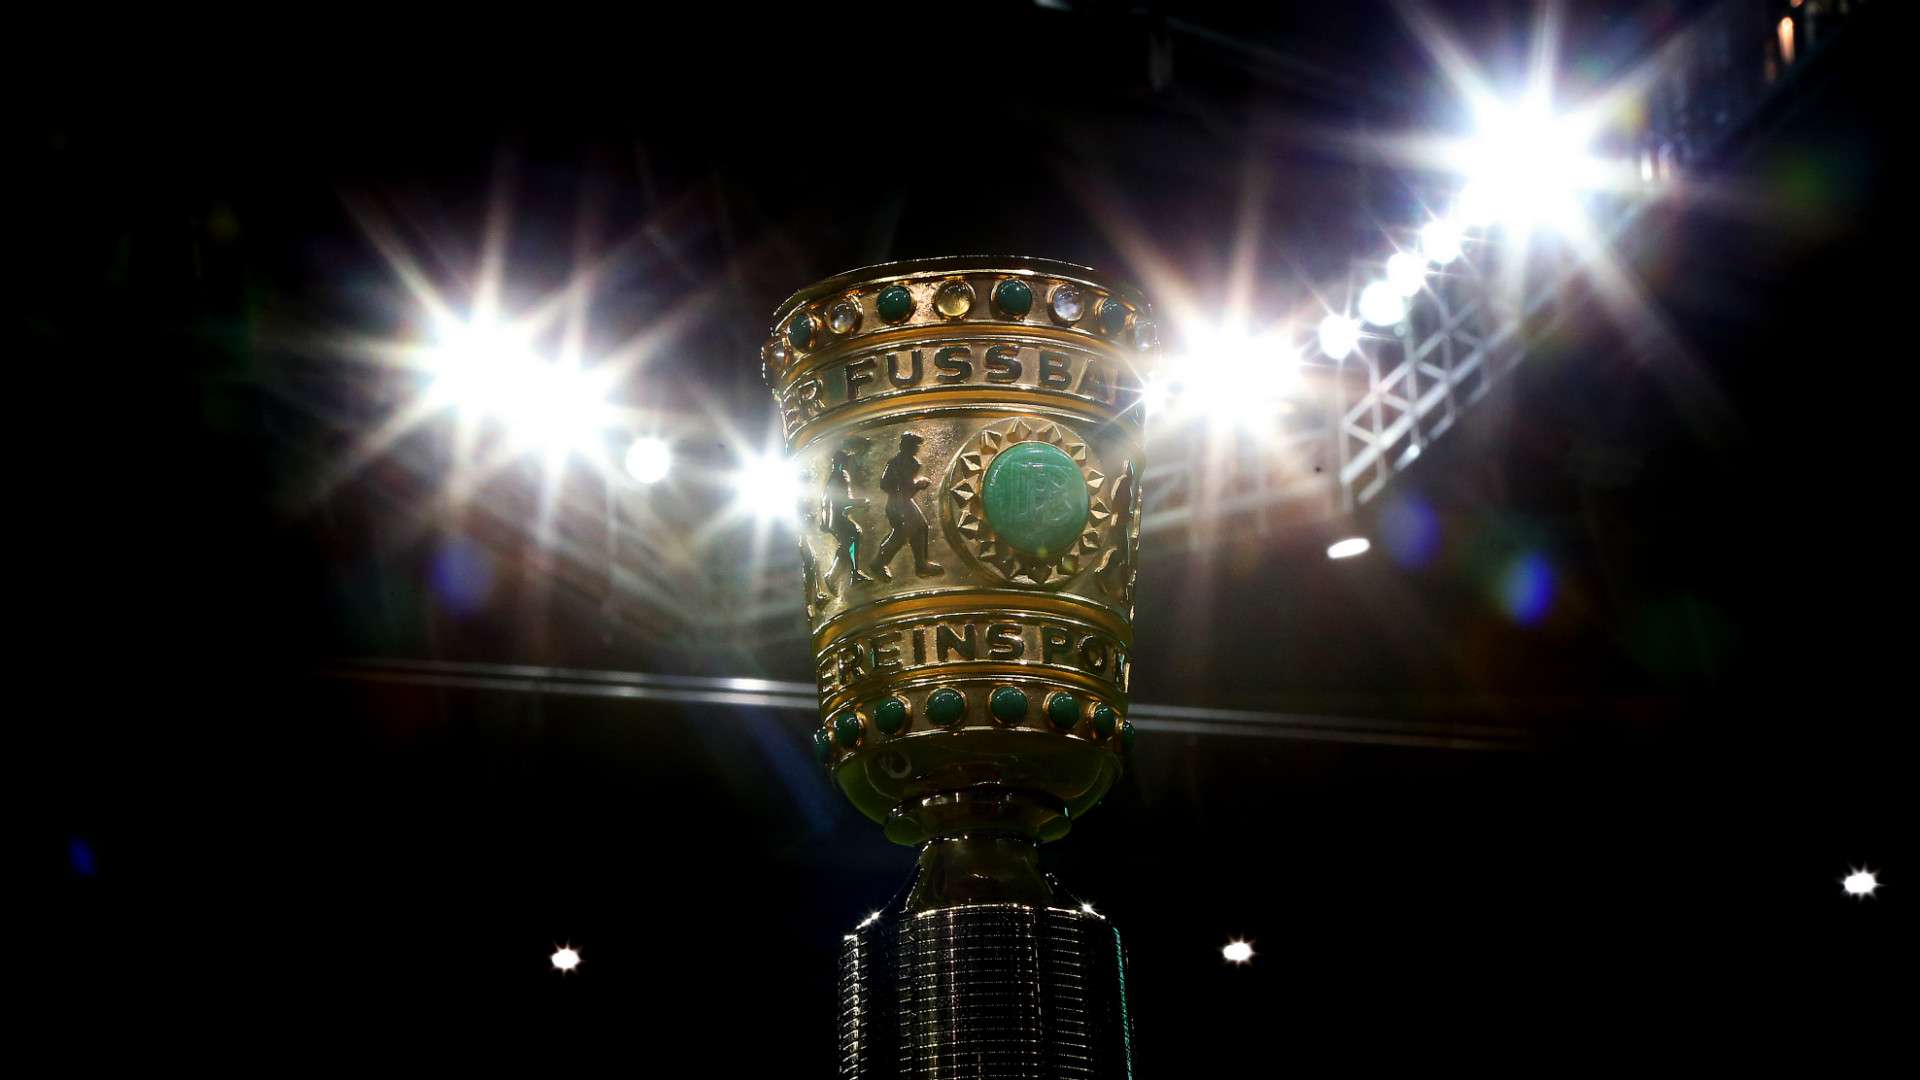 DFB Pokal Trophy